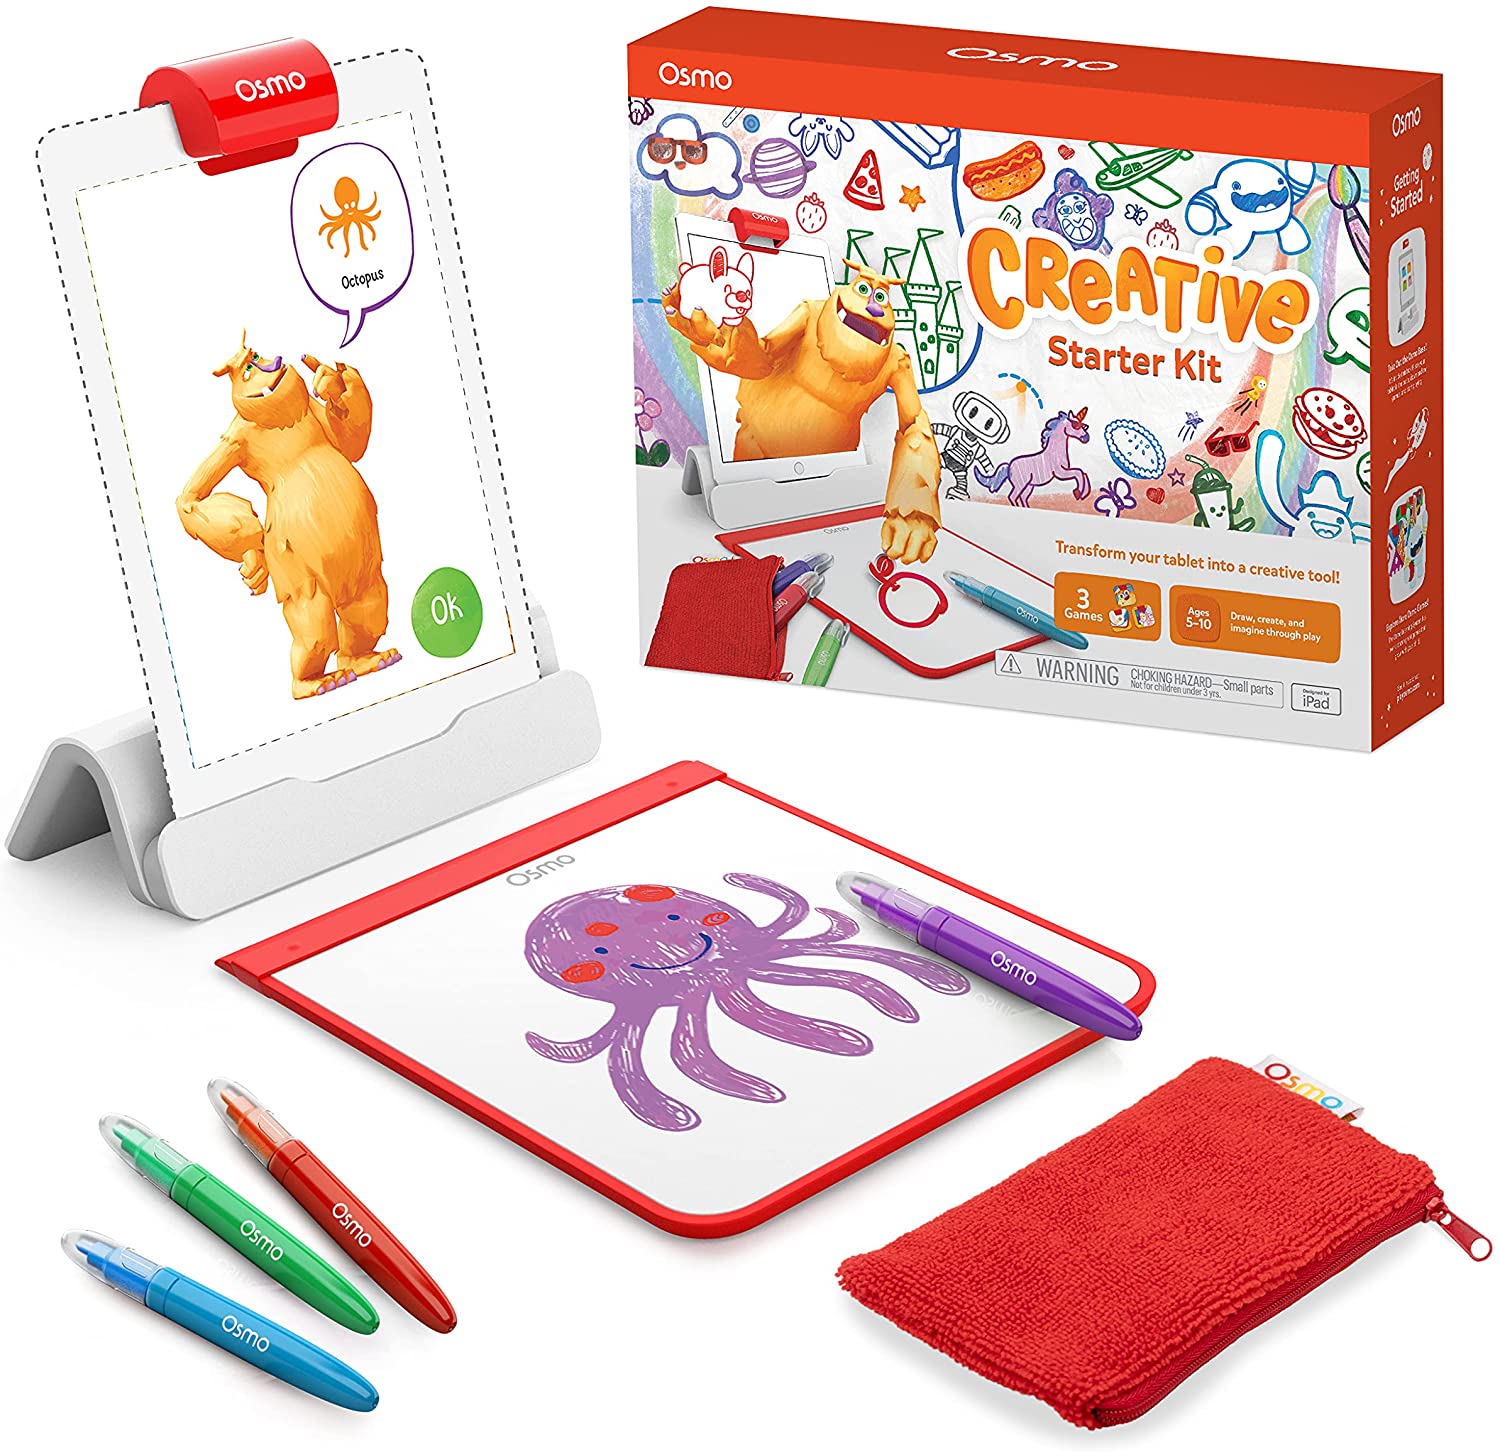 Osmo: Creative Starter Kit for iPad $33.30, Genius Starter Kit for iPad $42.80 & More + Free Shipping